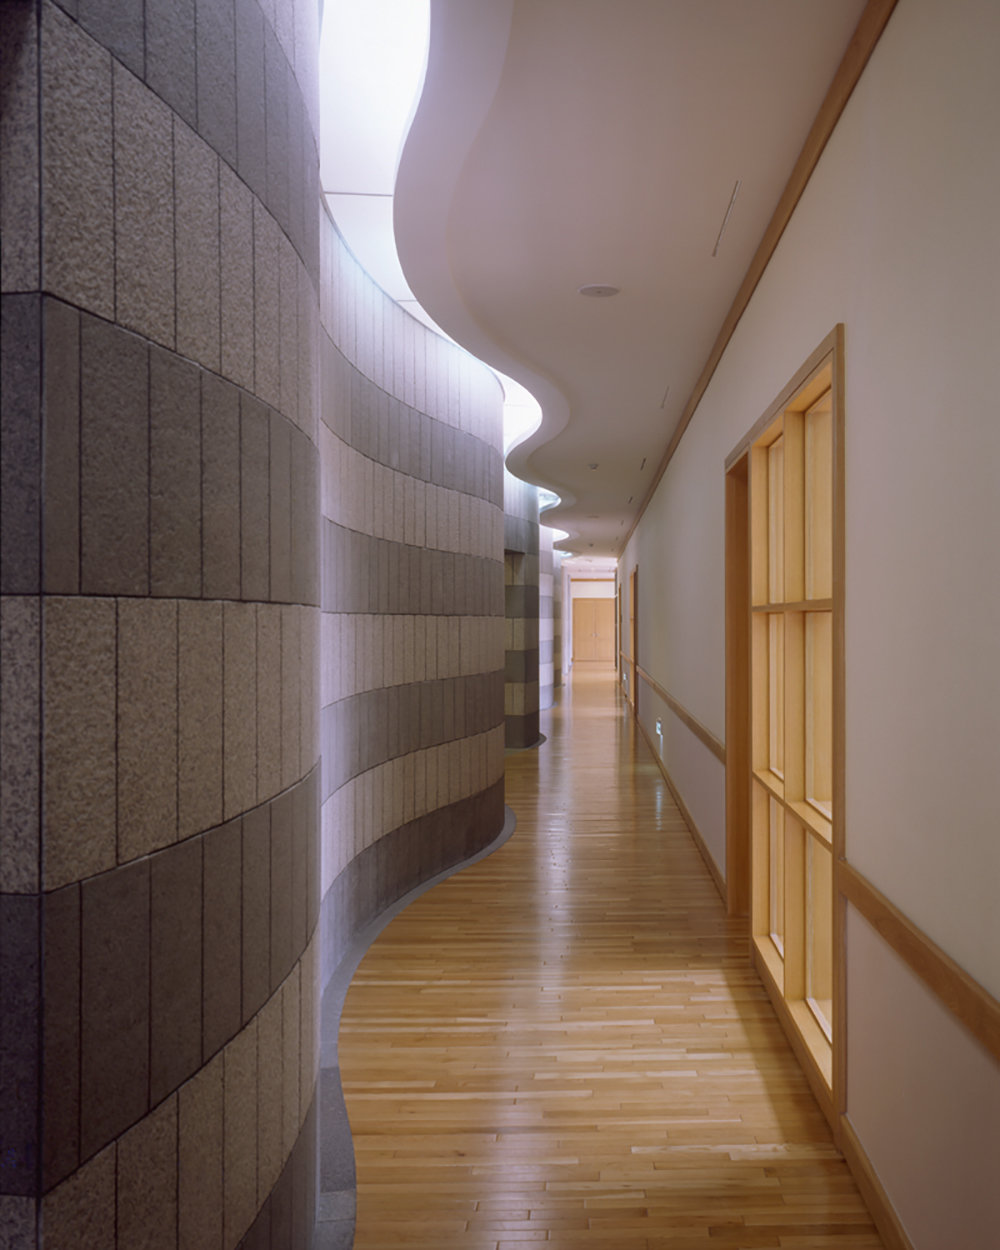 8 tskp kookmin insurance company corporate training center interior detail wavy walls hallway and ceiling design natural lighting 1400 xxx q85